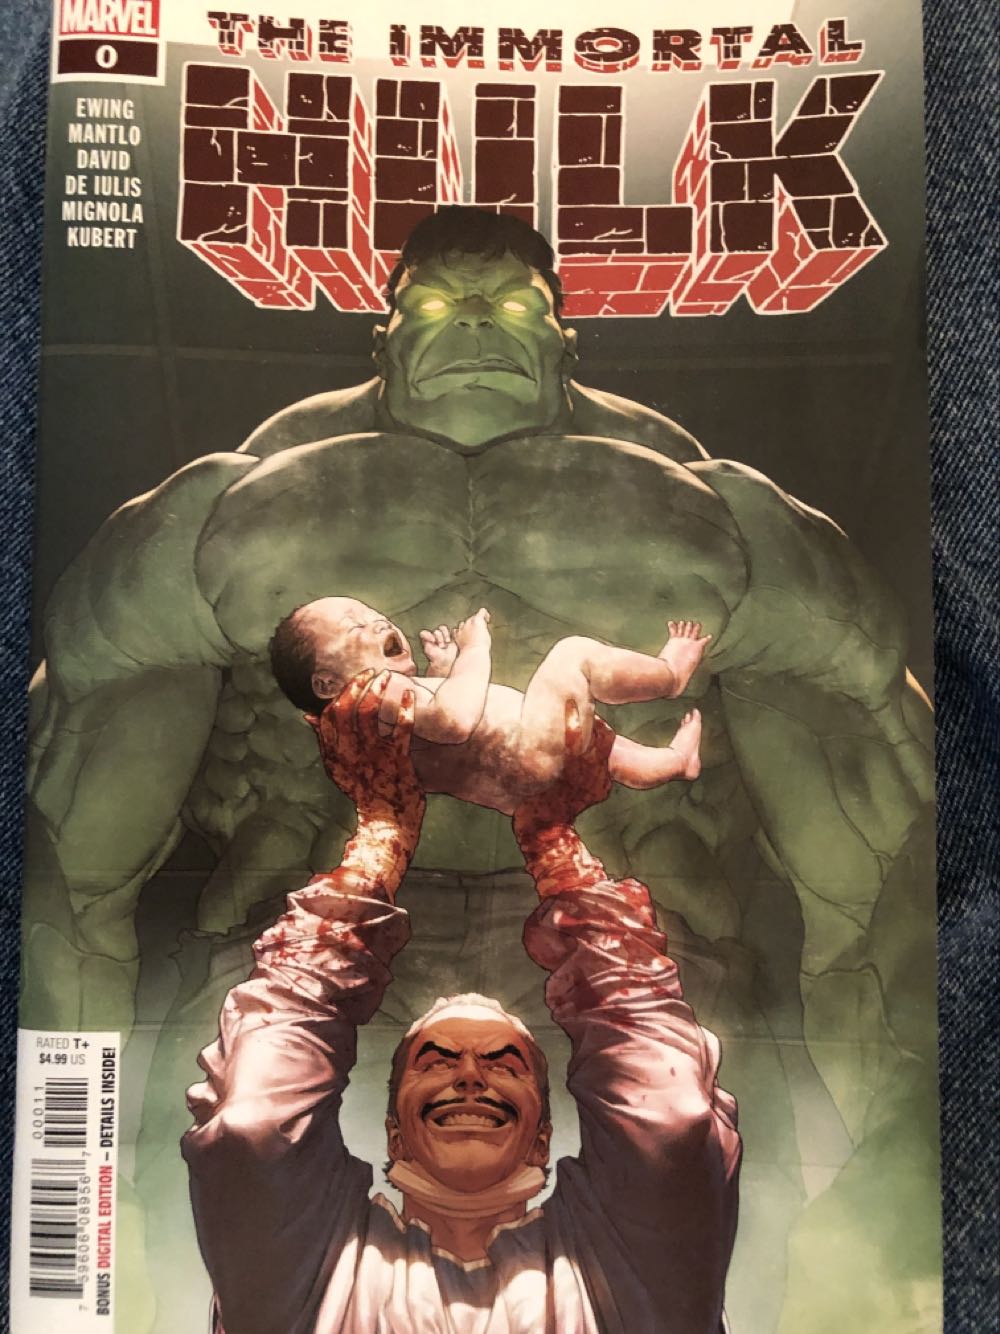 Immortal Hulk - Marvel Comics (0 - Nov 2020) comic book collectible [Barcode 75960608956700011] - Main Image 1